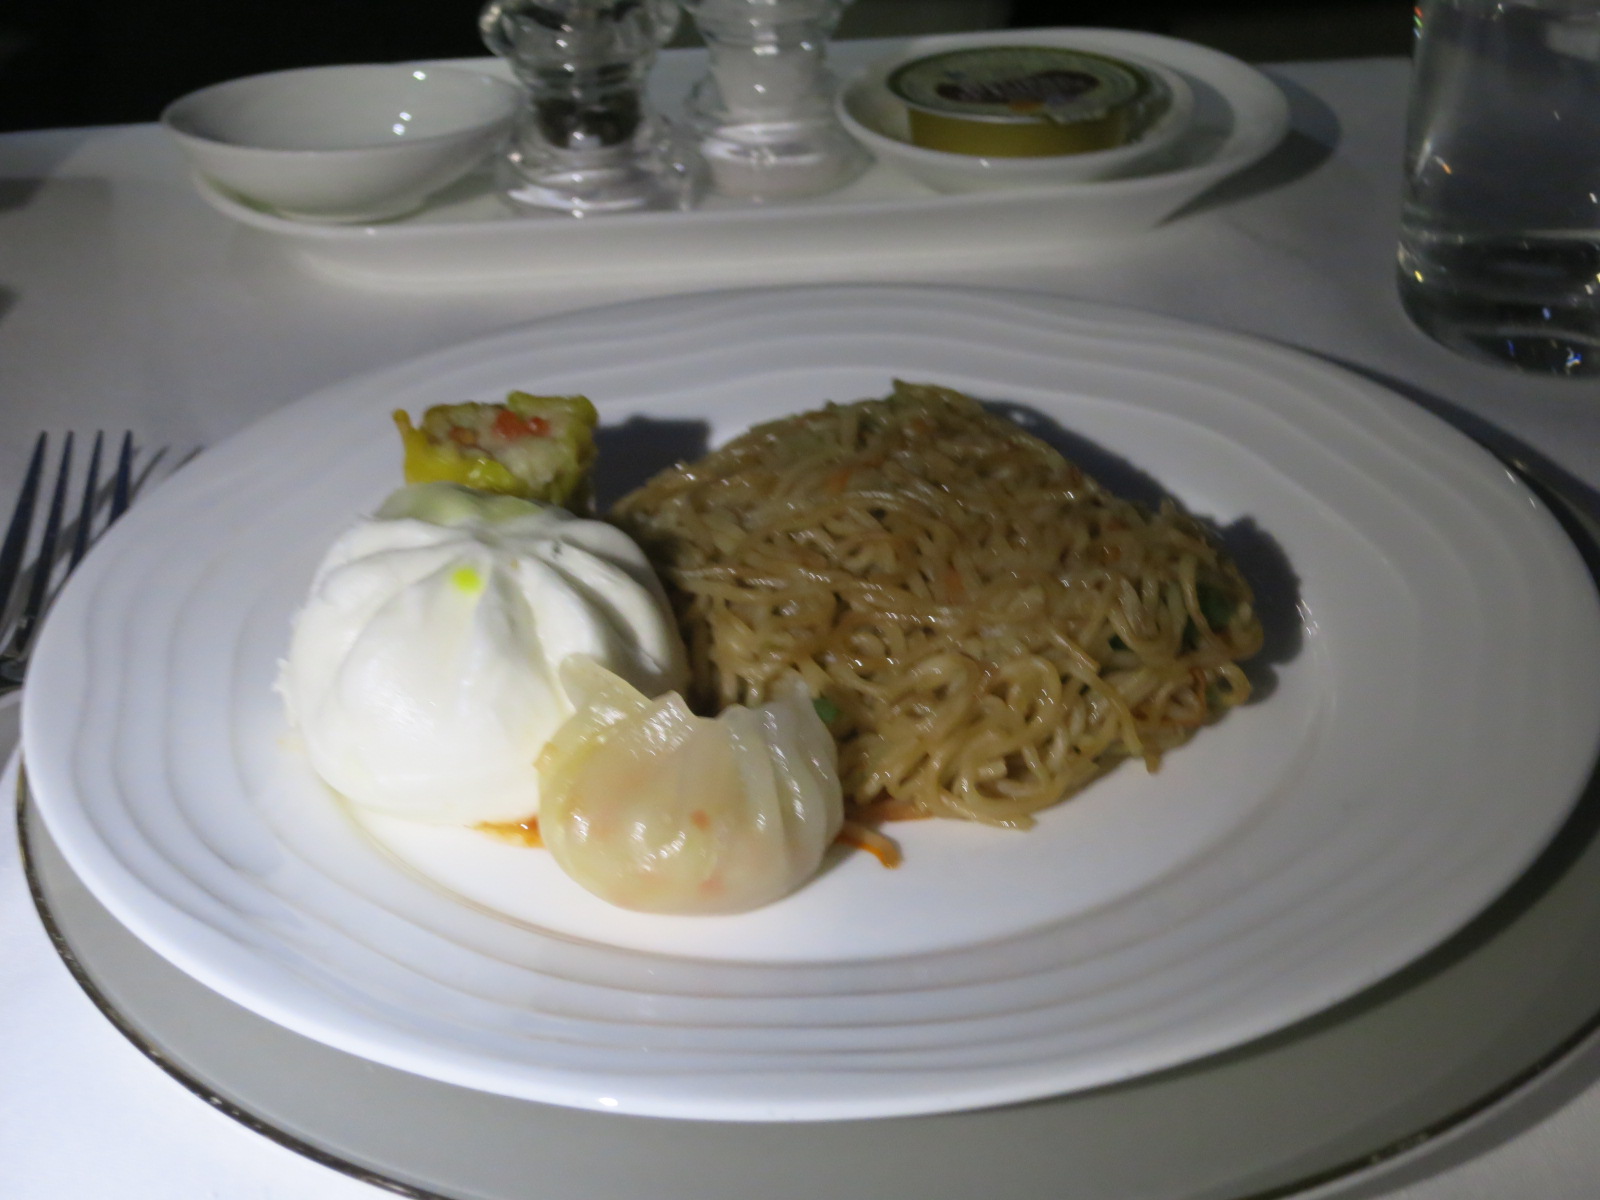 Emirates first class a380 Dubai Bangkok dinner service